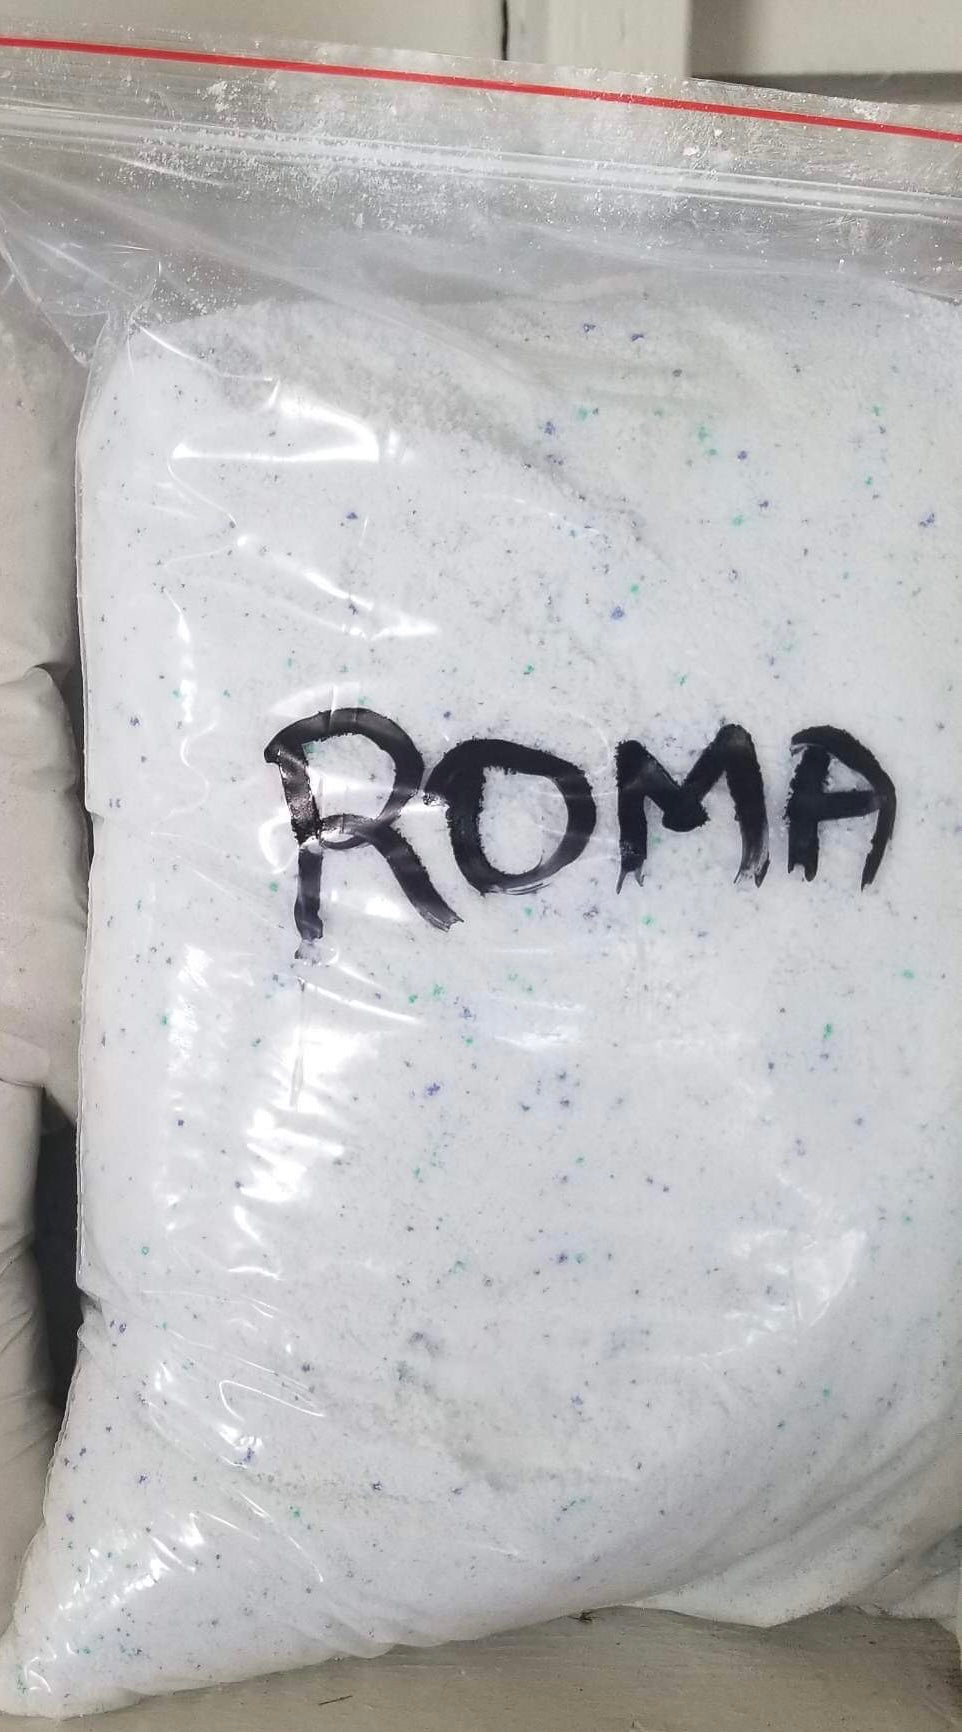 Roma laundry detergent (laundry)